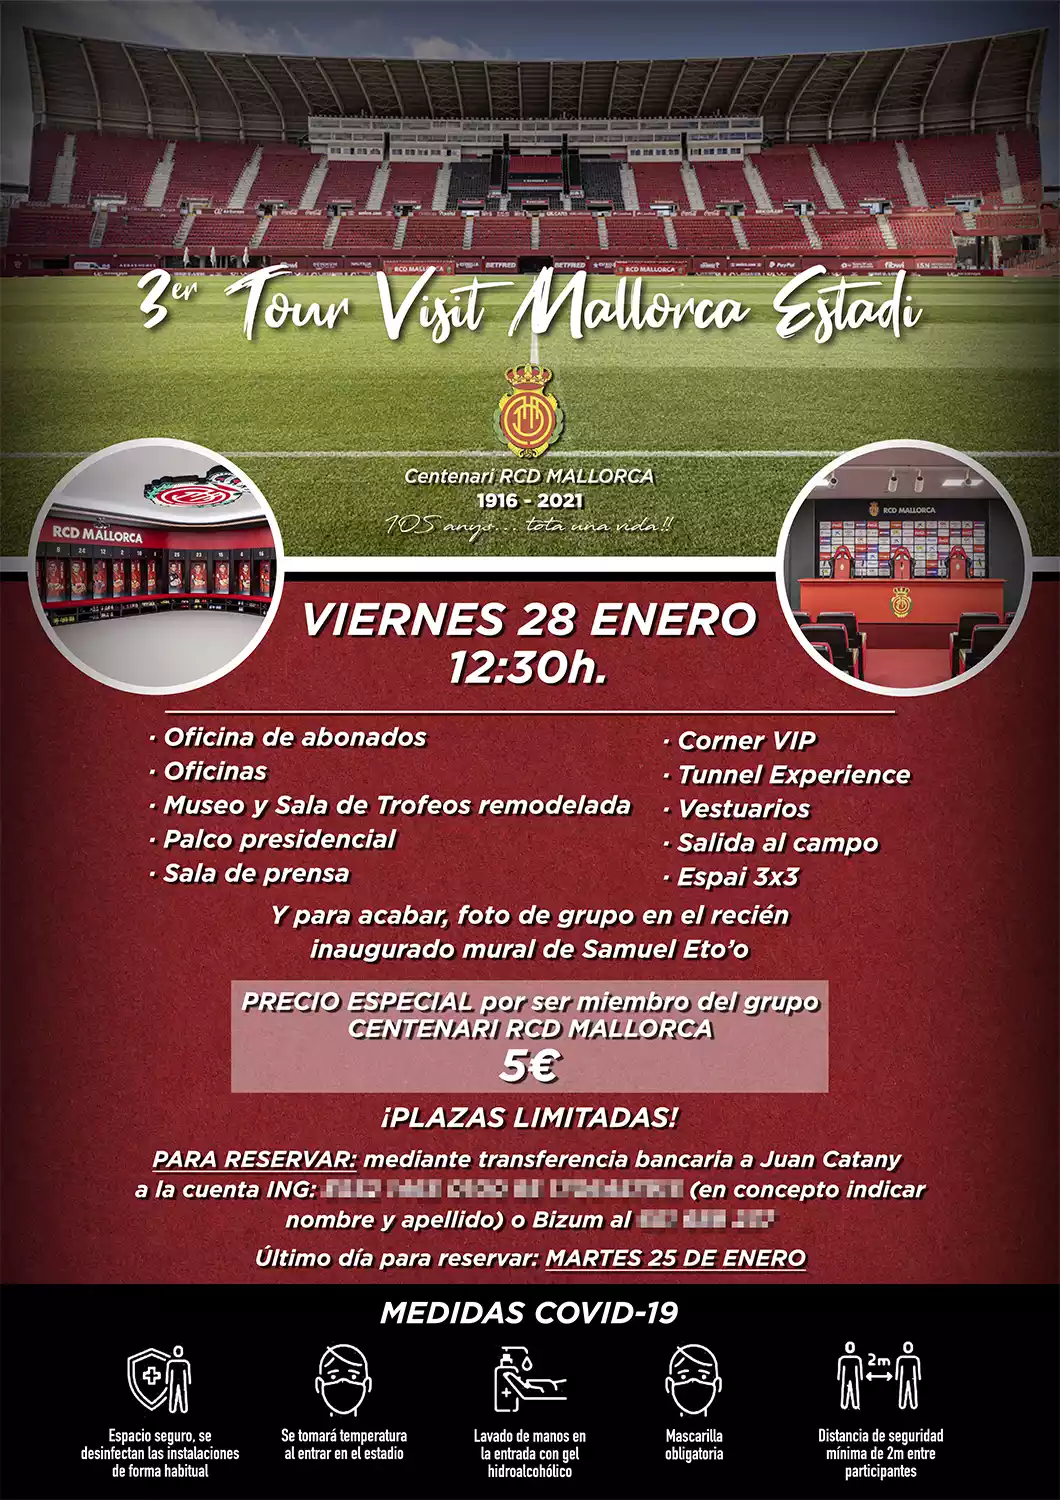 RCD Mallorca stadium tour